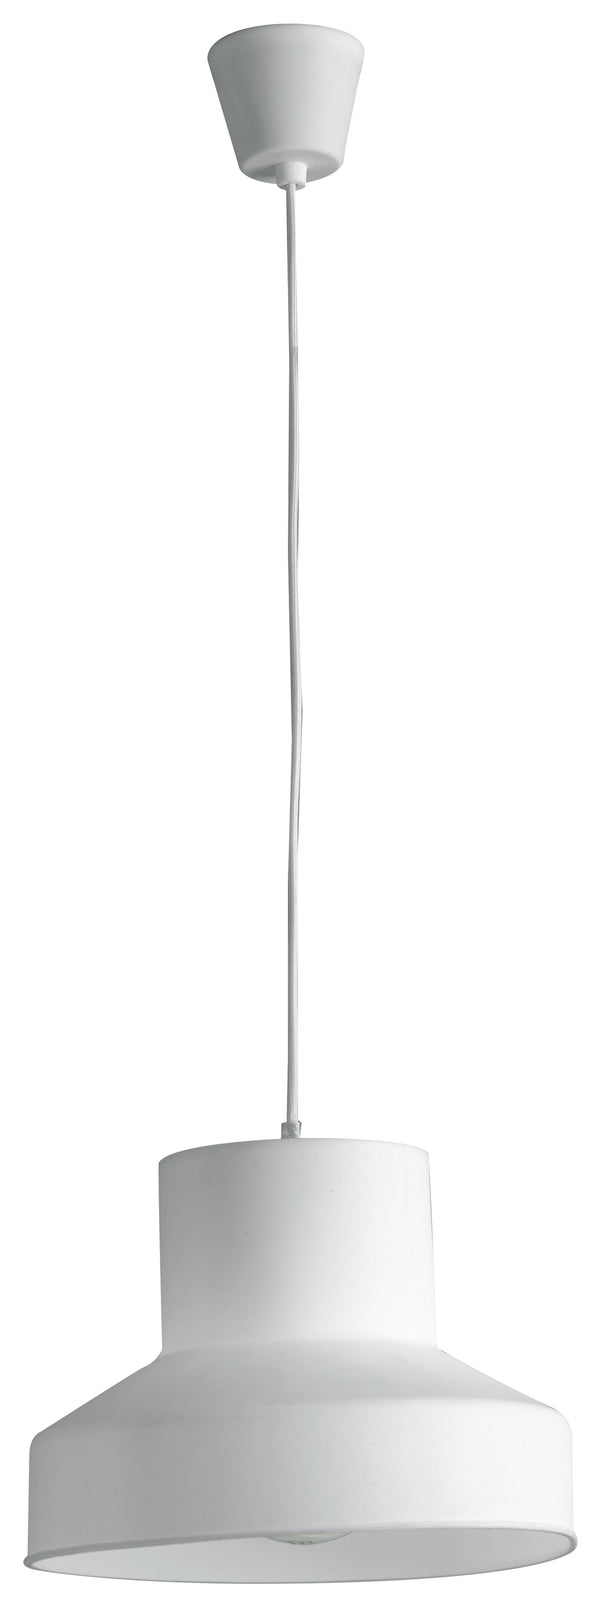 Aufhängung Moderner Kronleuchter aus weißem Silikon E27 Environment I-LENNON/S1 prezzo